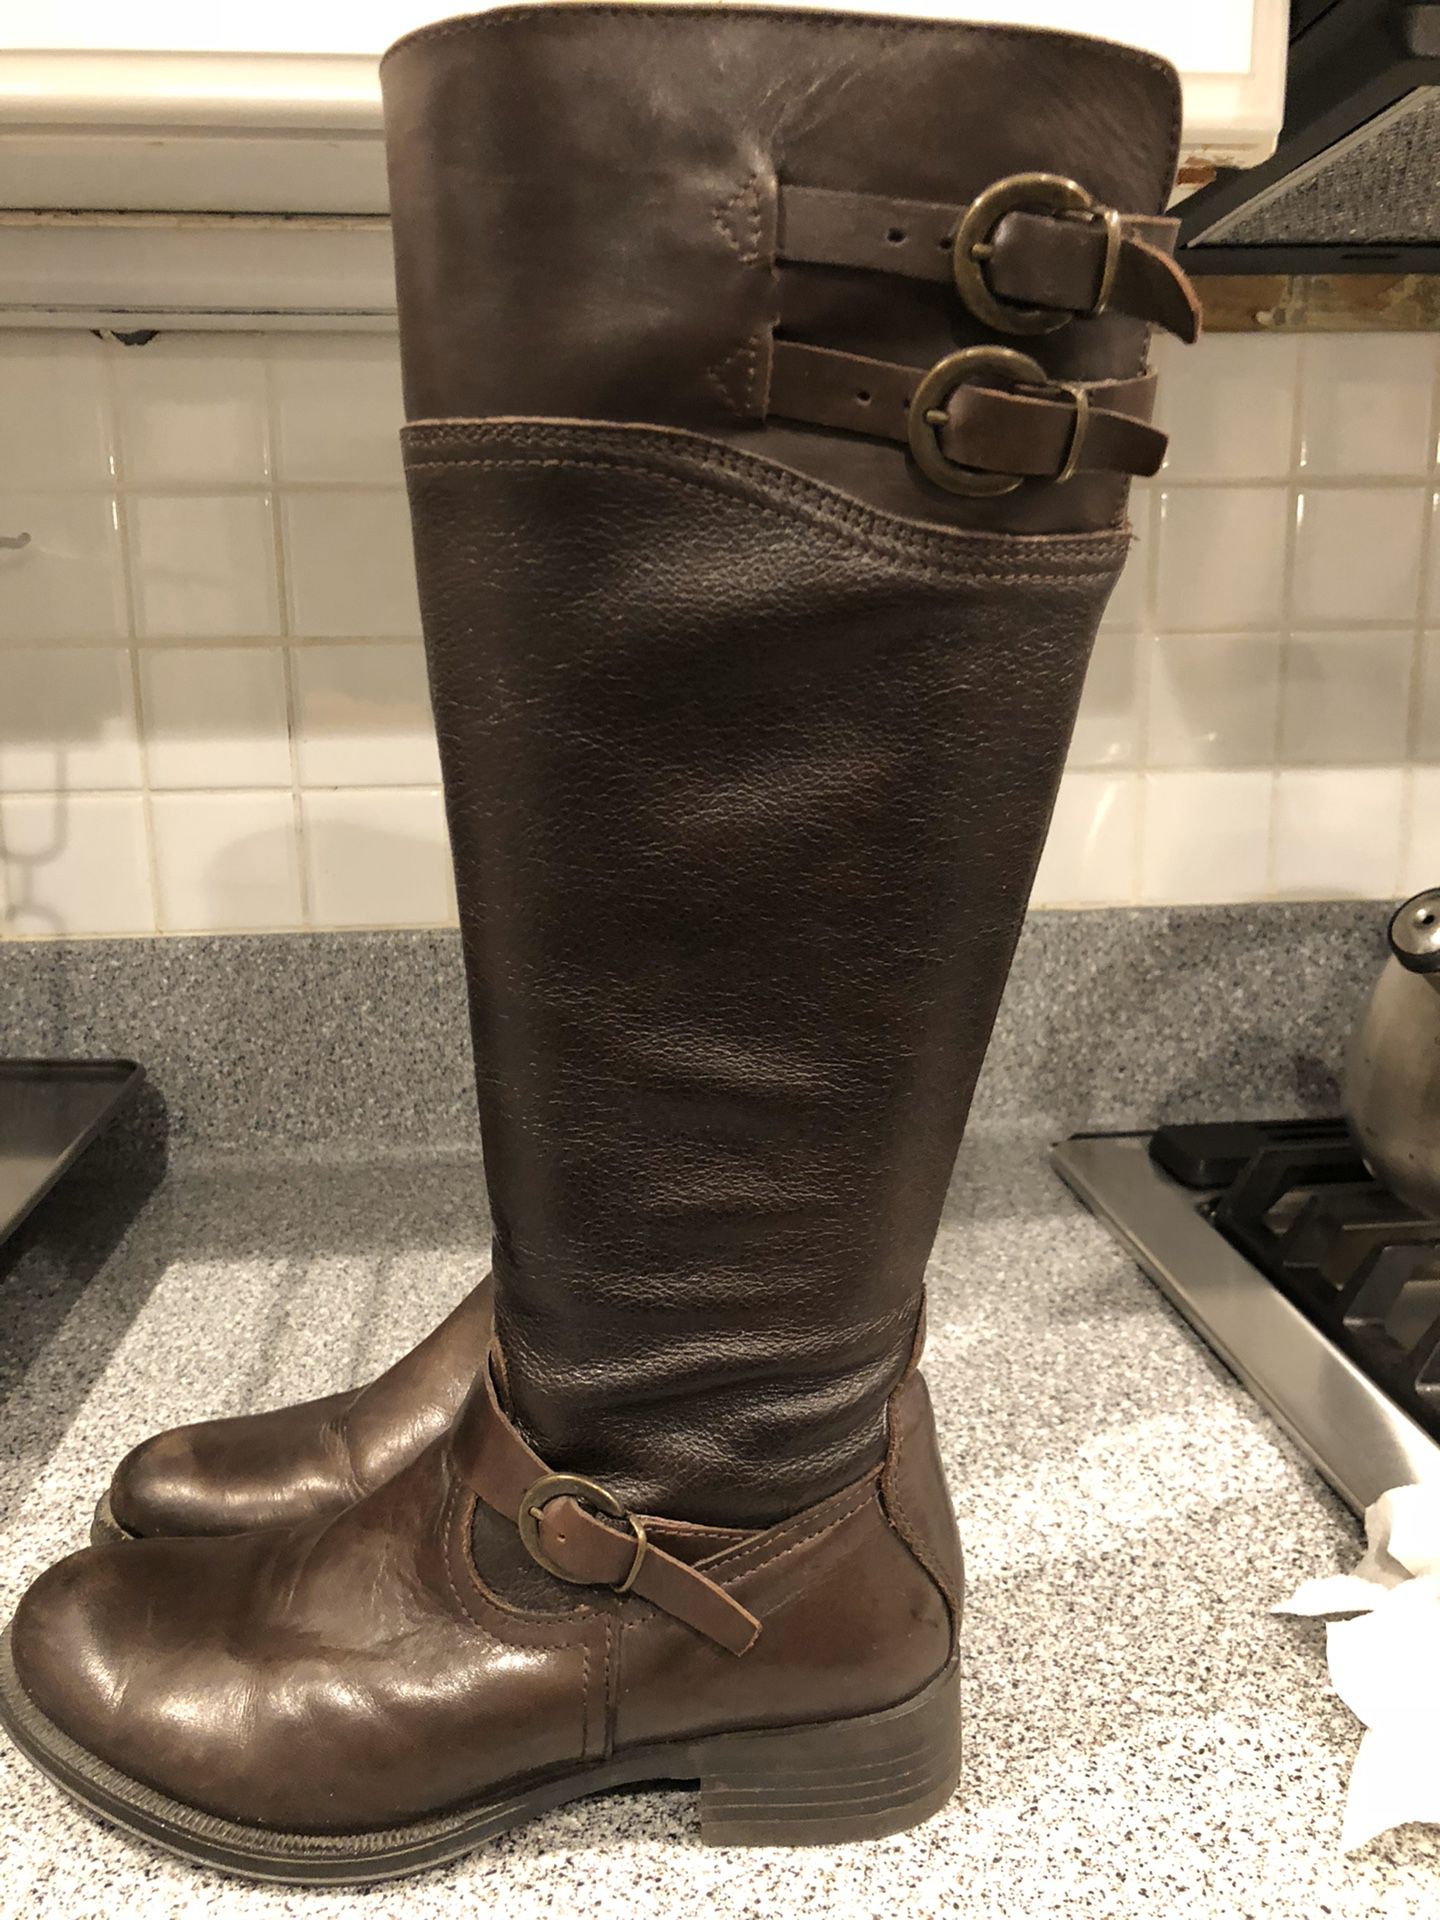 Aldo women’s boots size 37